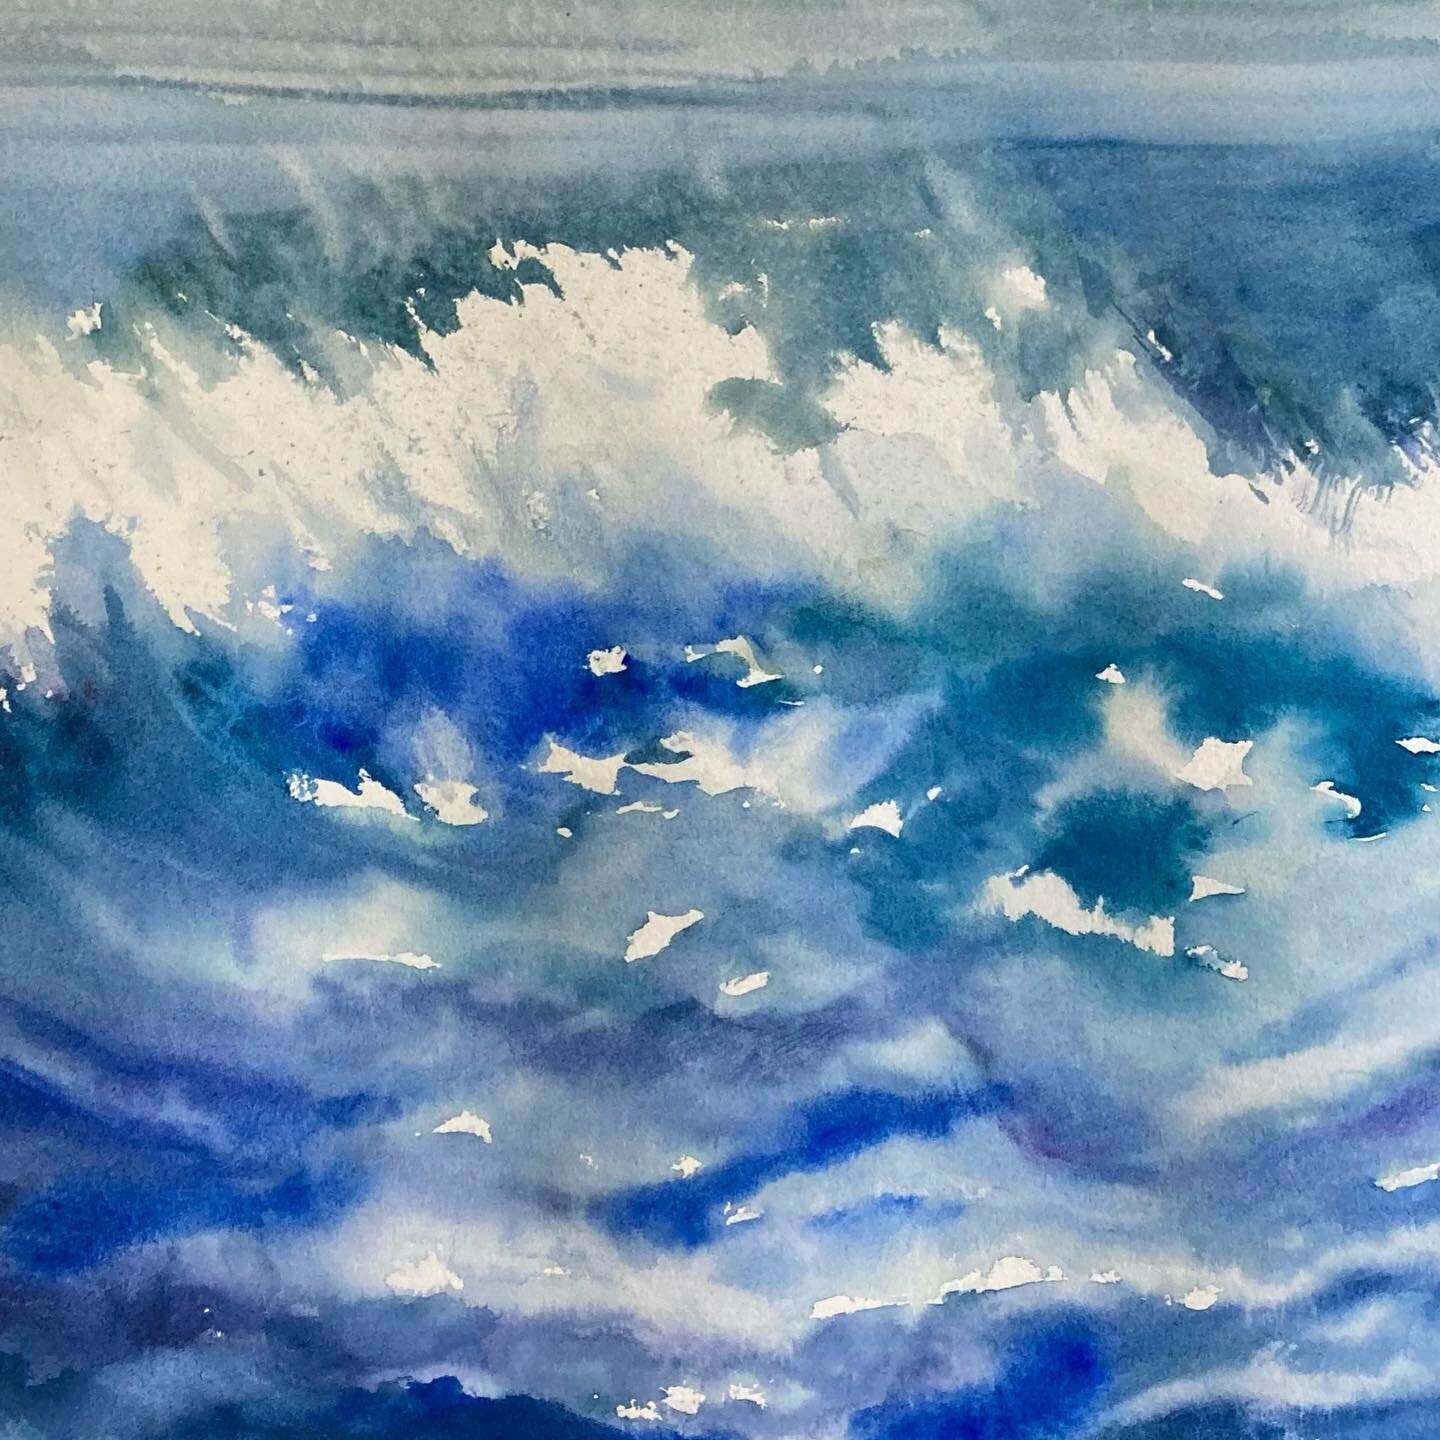 Just waves on this one #seapaint #wildwaves #oceanview #sealovers #mainecoast #mainevacation #mainesummer #watercolorartistmagazine #seaart #acadianationalpark #acadia